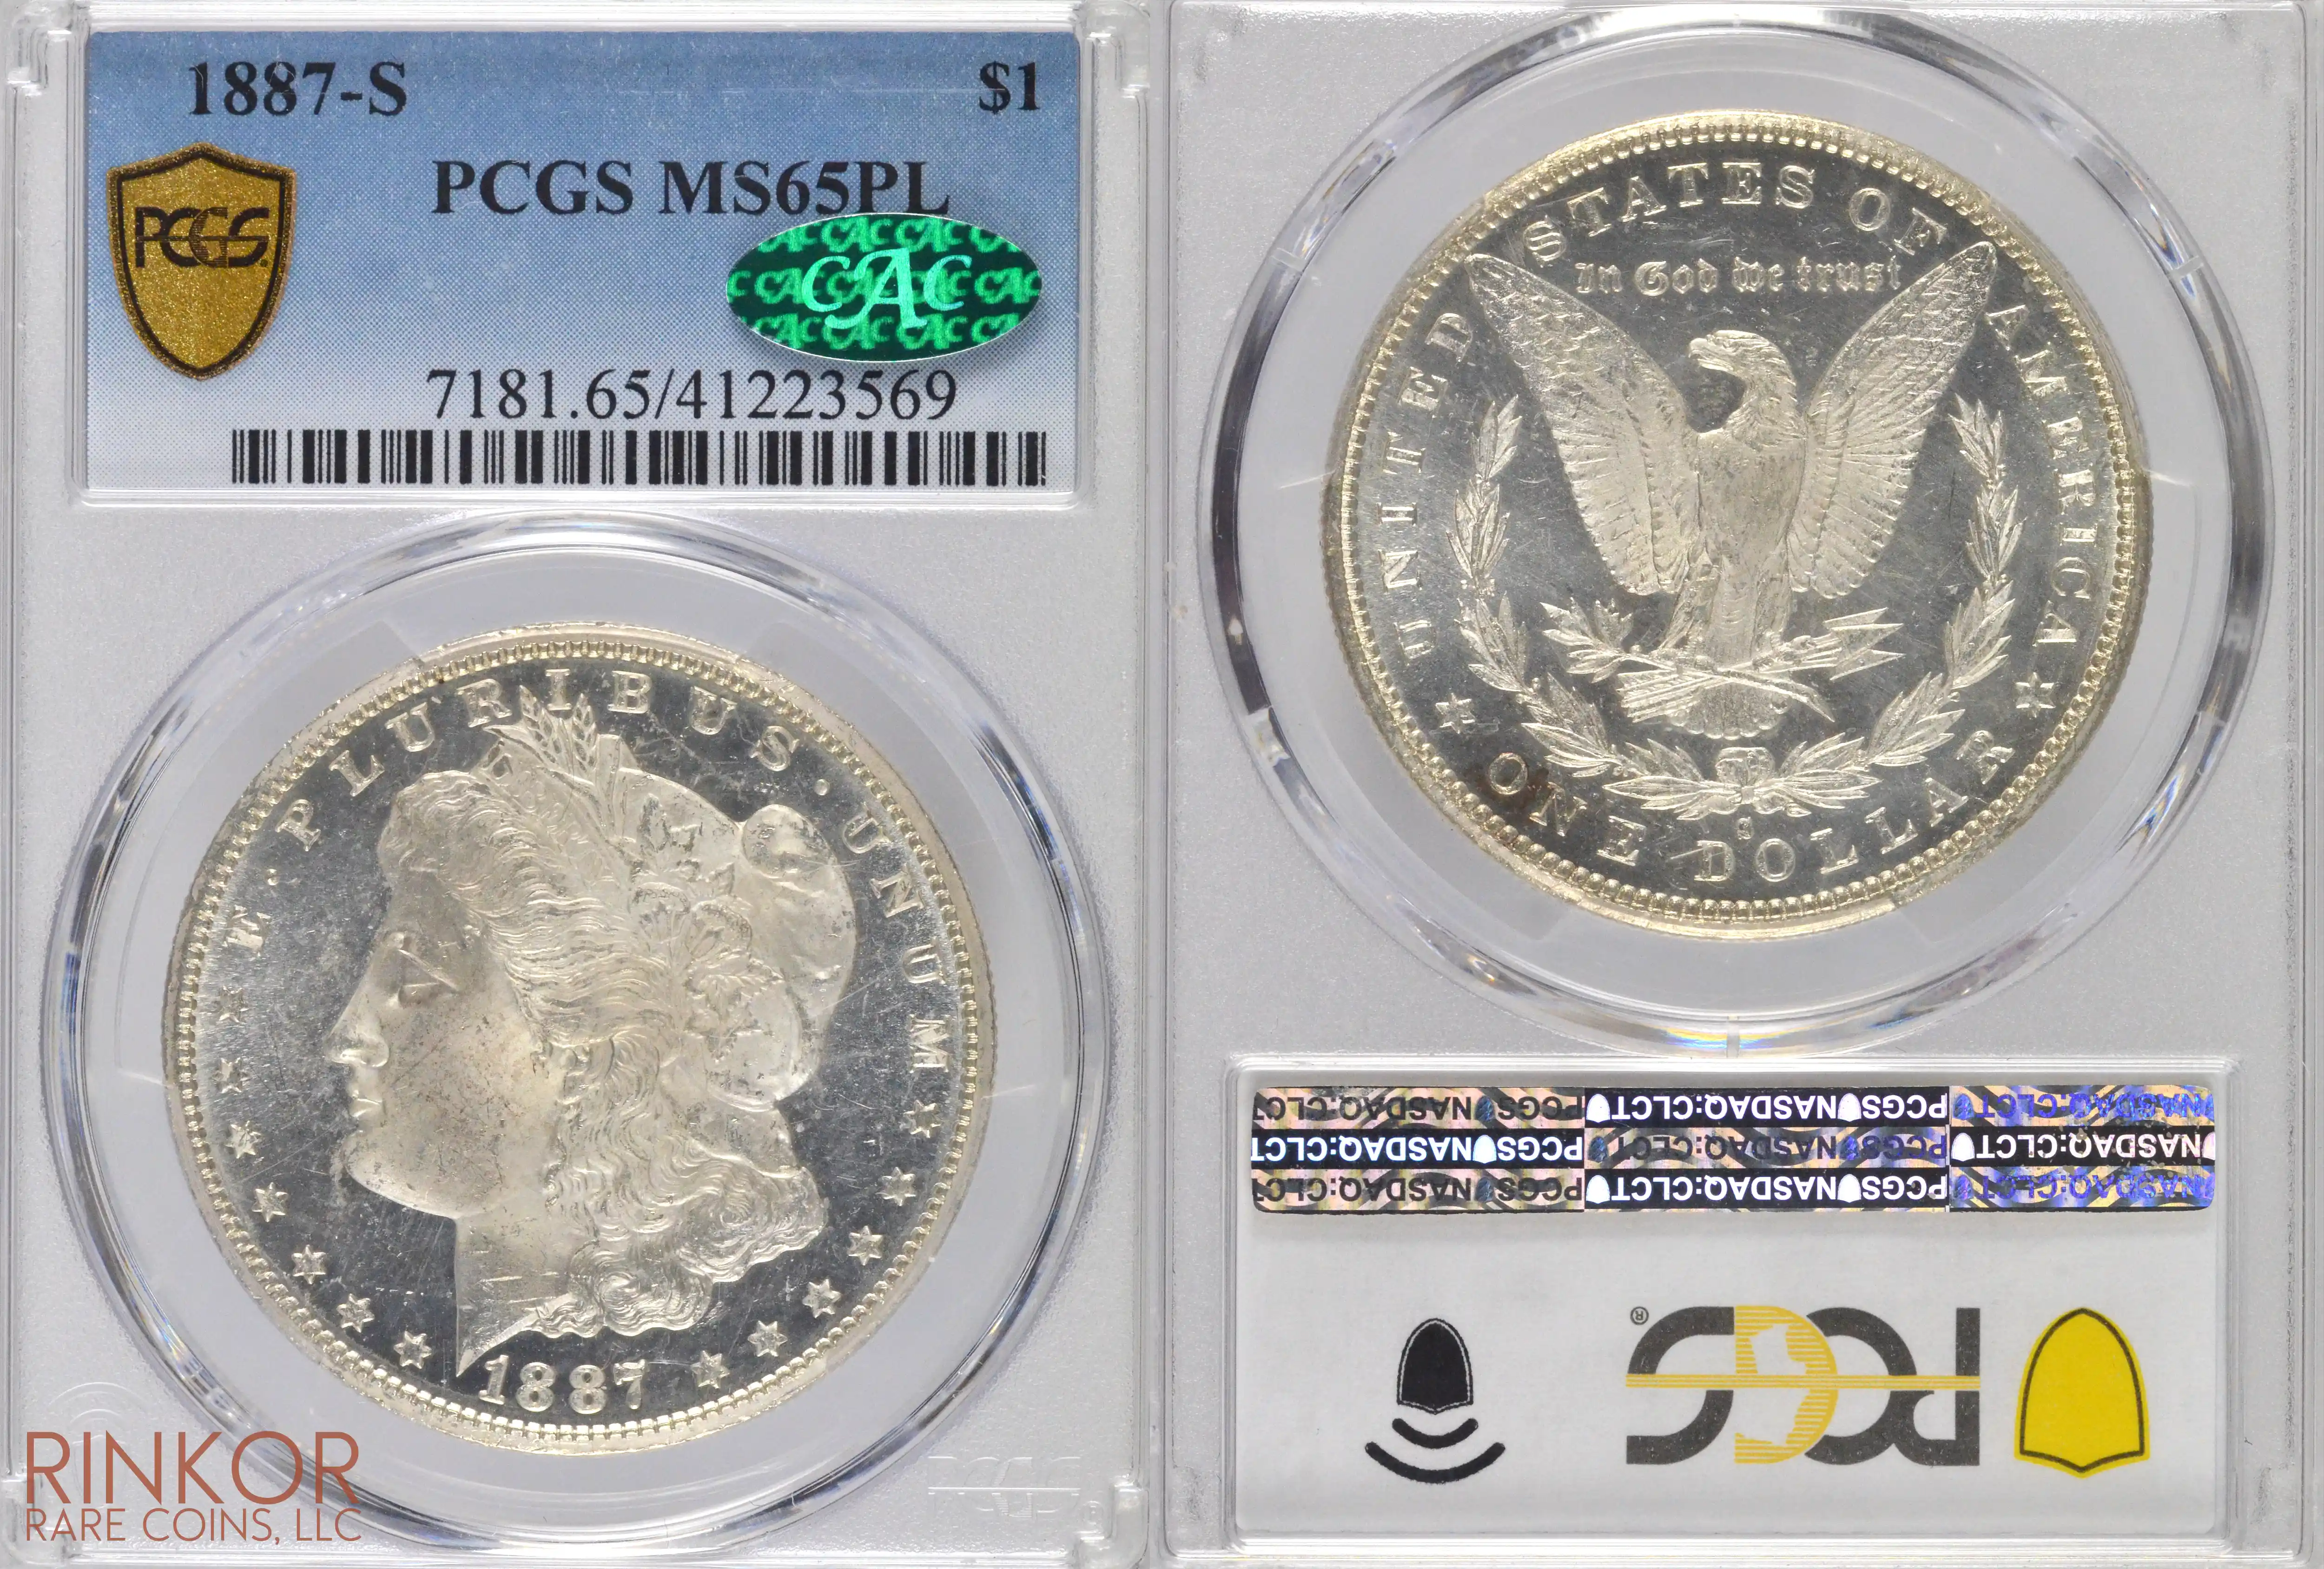 1887-S $1 PCGS MS 65 PL CAC